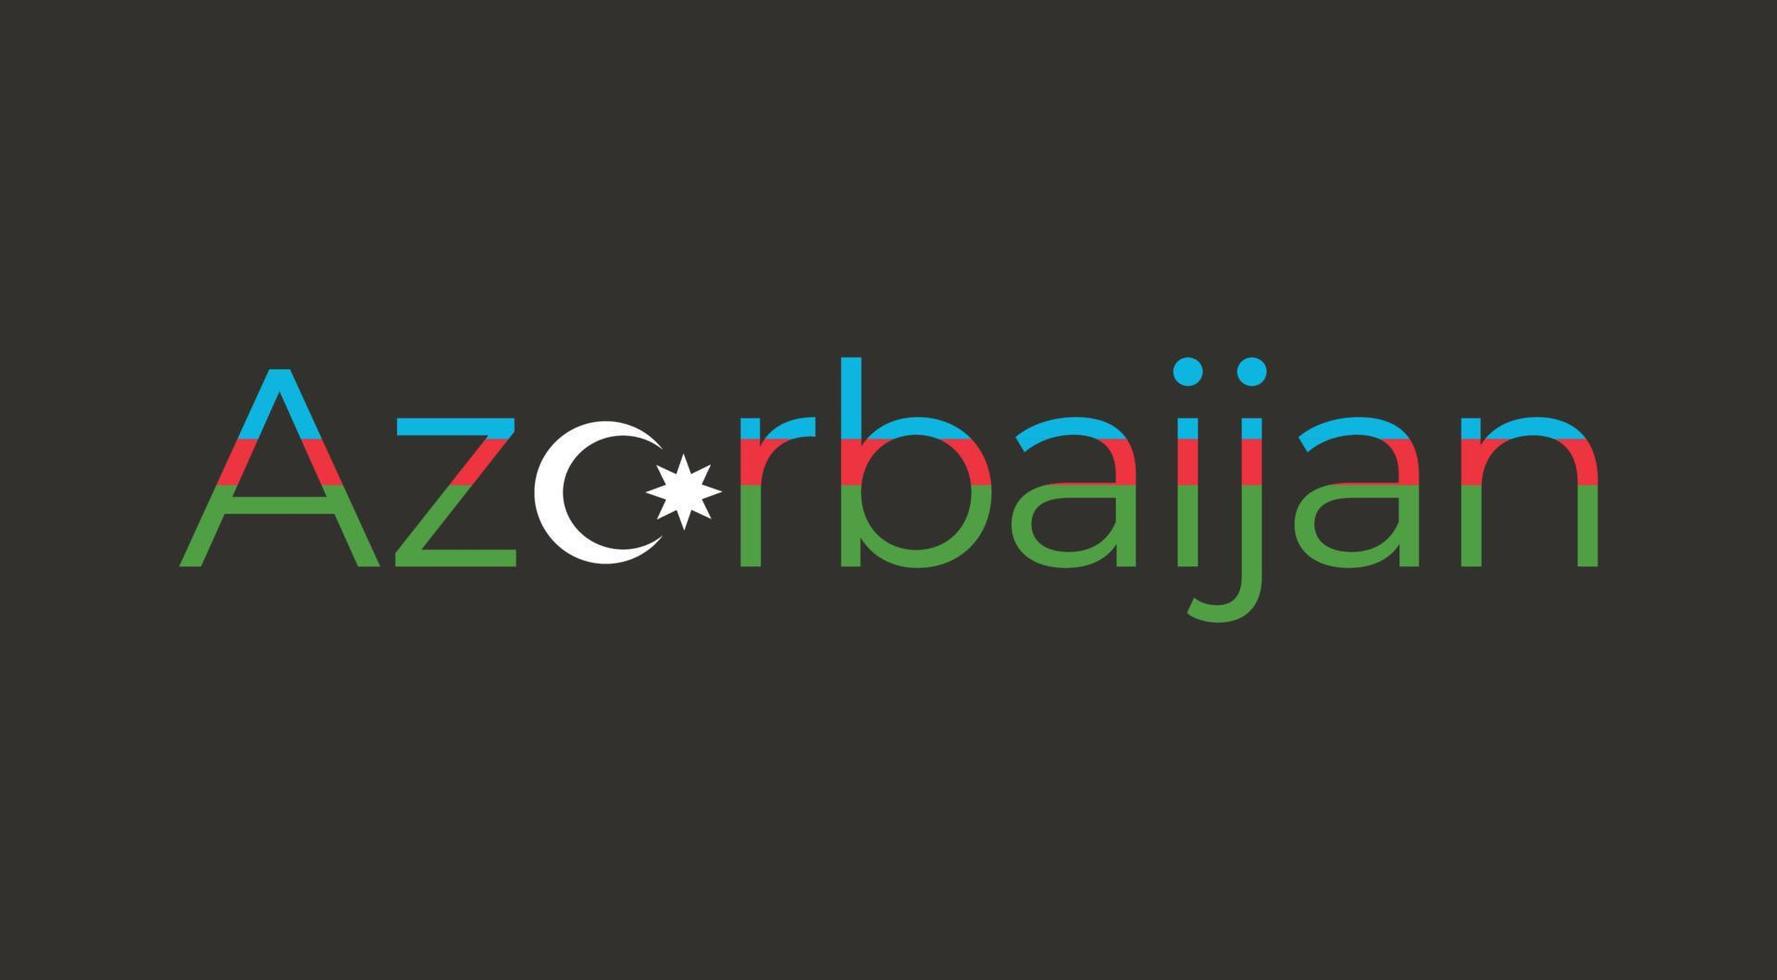 Typography Design of Azerbaijan vector